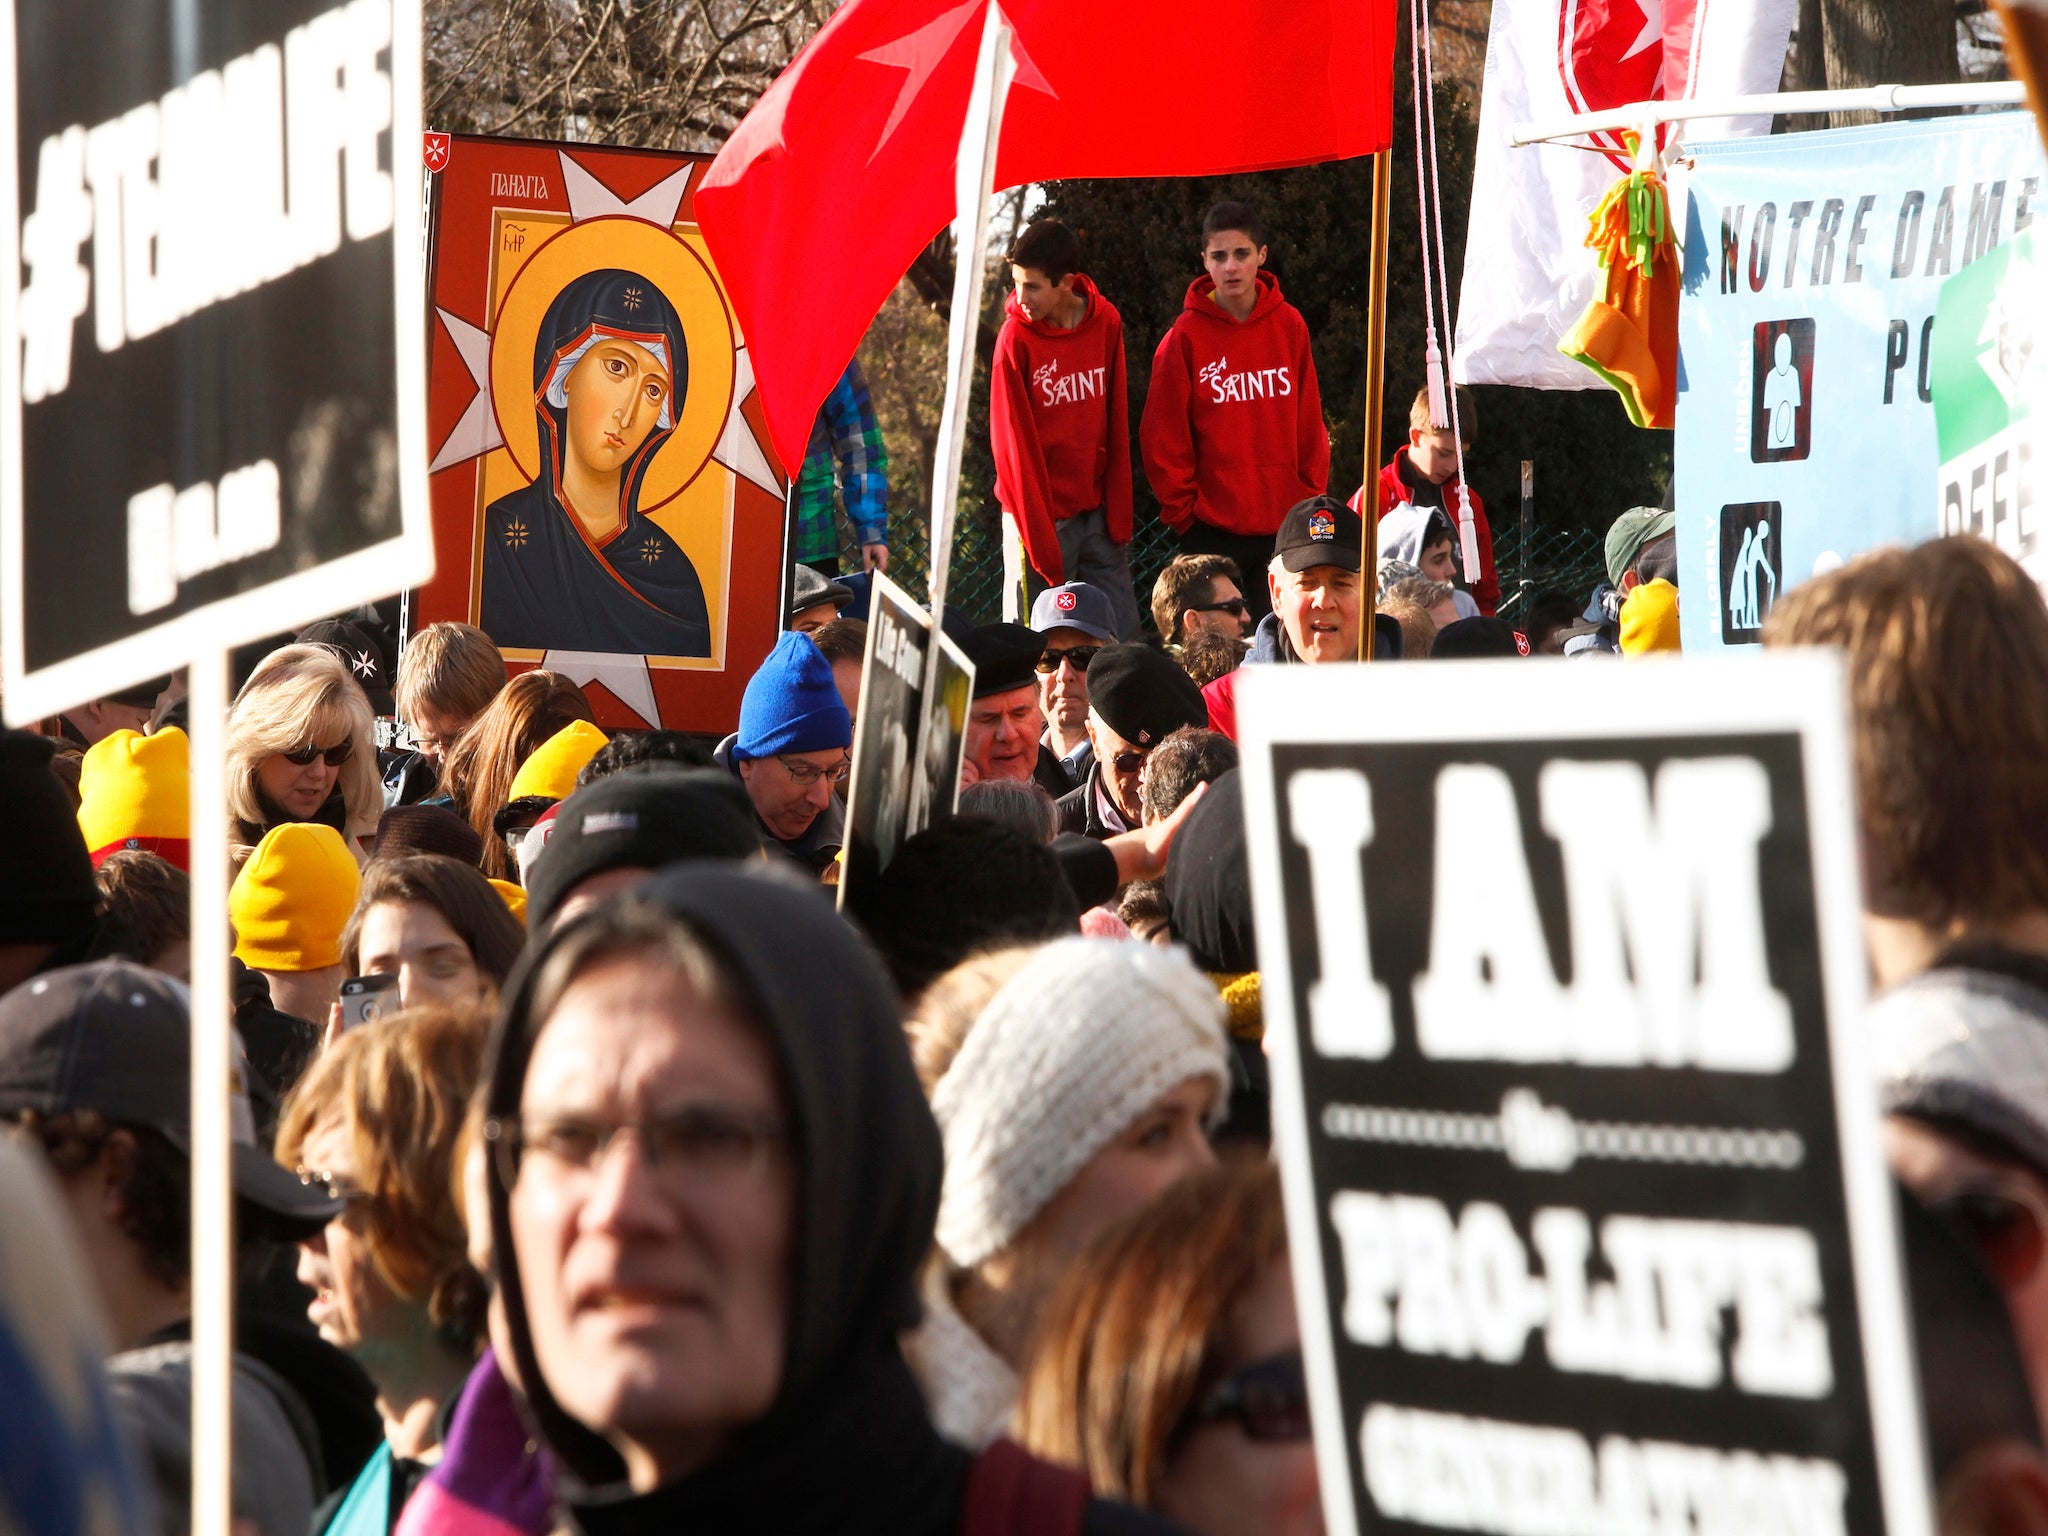 Anti-abortion protesters in Washington